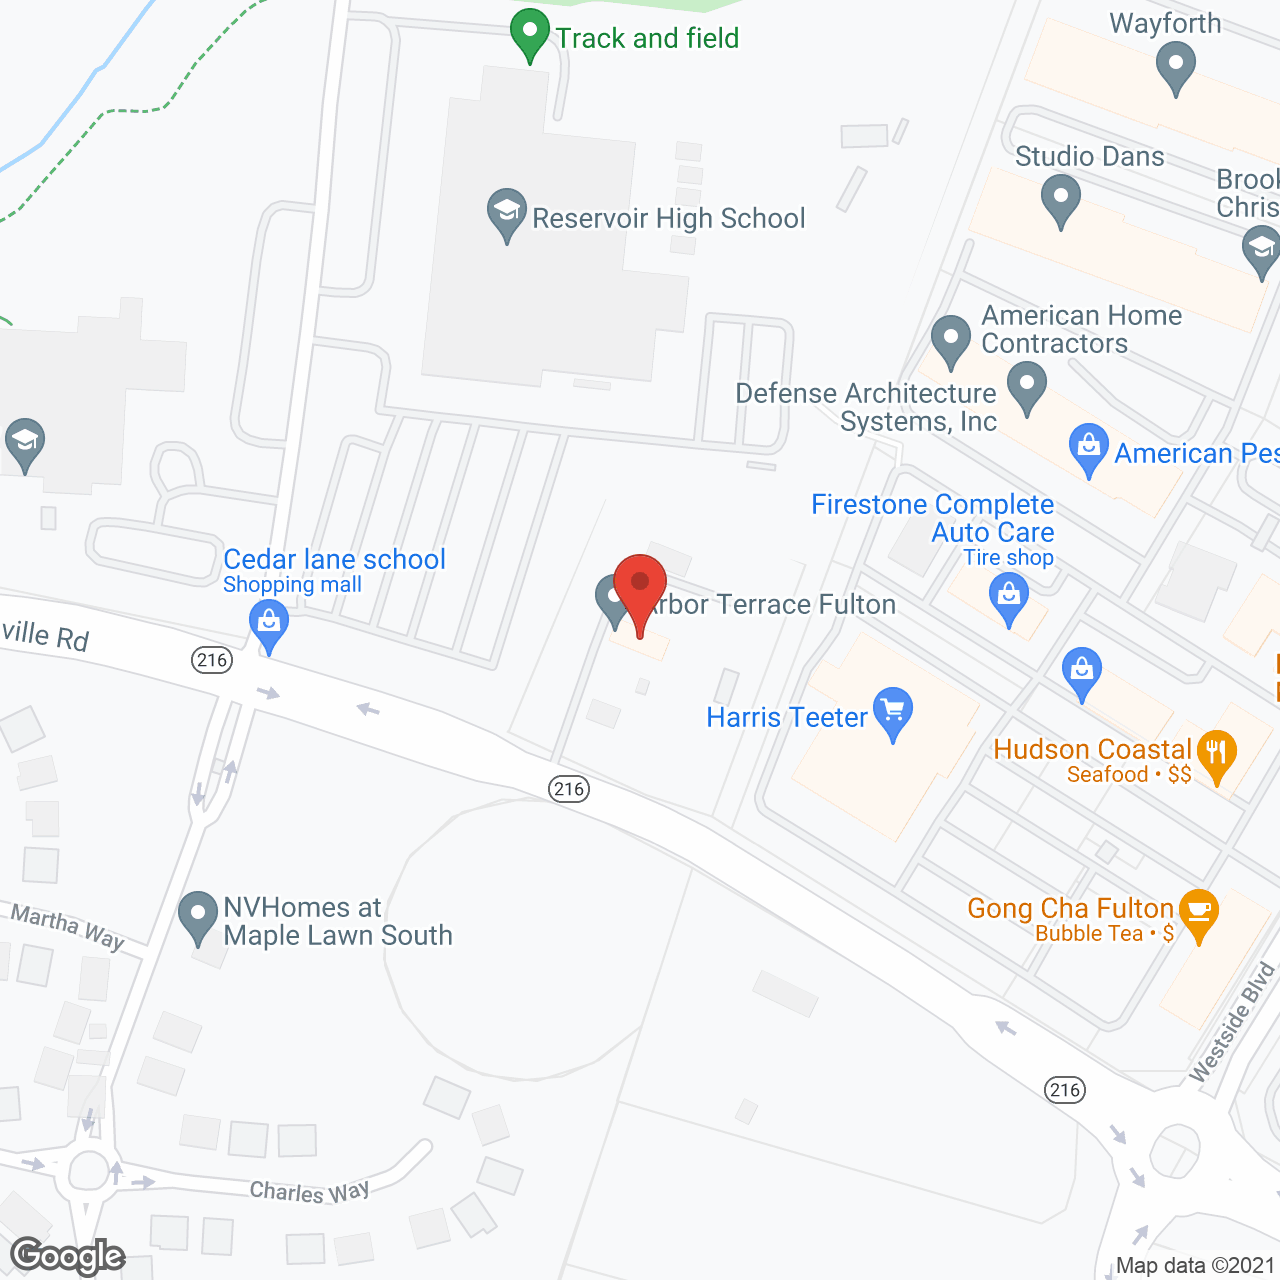 Arbor Terrace Fulton in google map